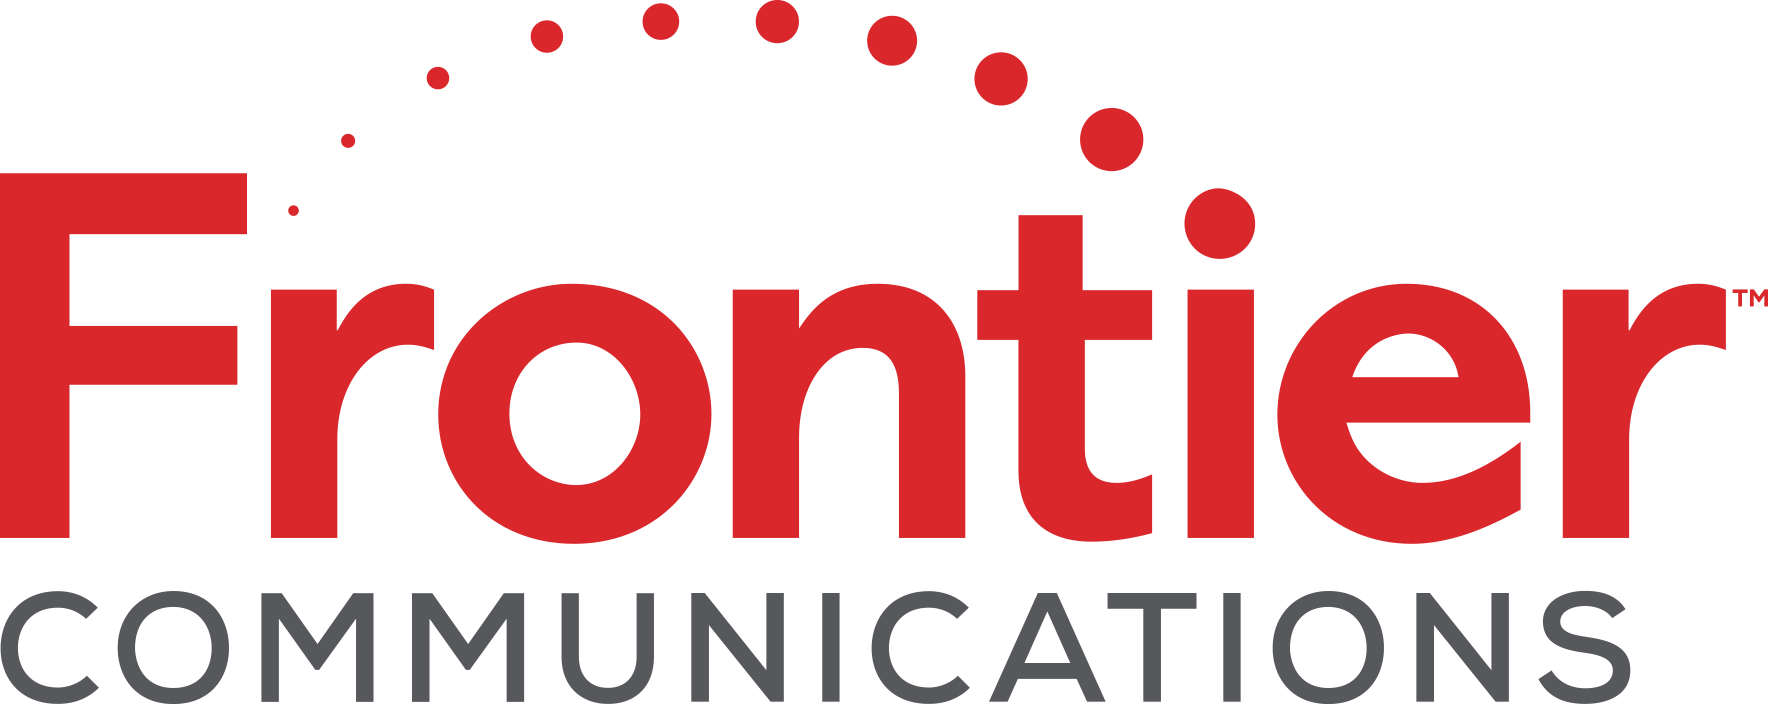 Comm Logo - Frontier Communications - Brand Standards | Frontier.com